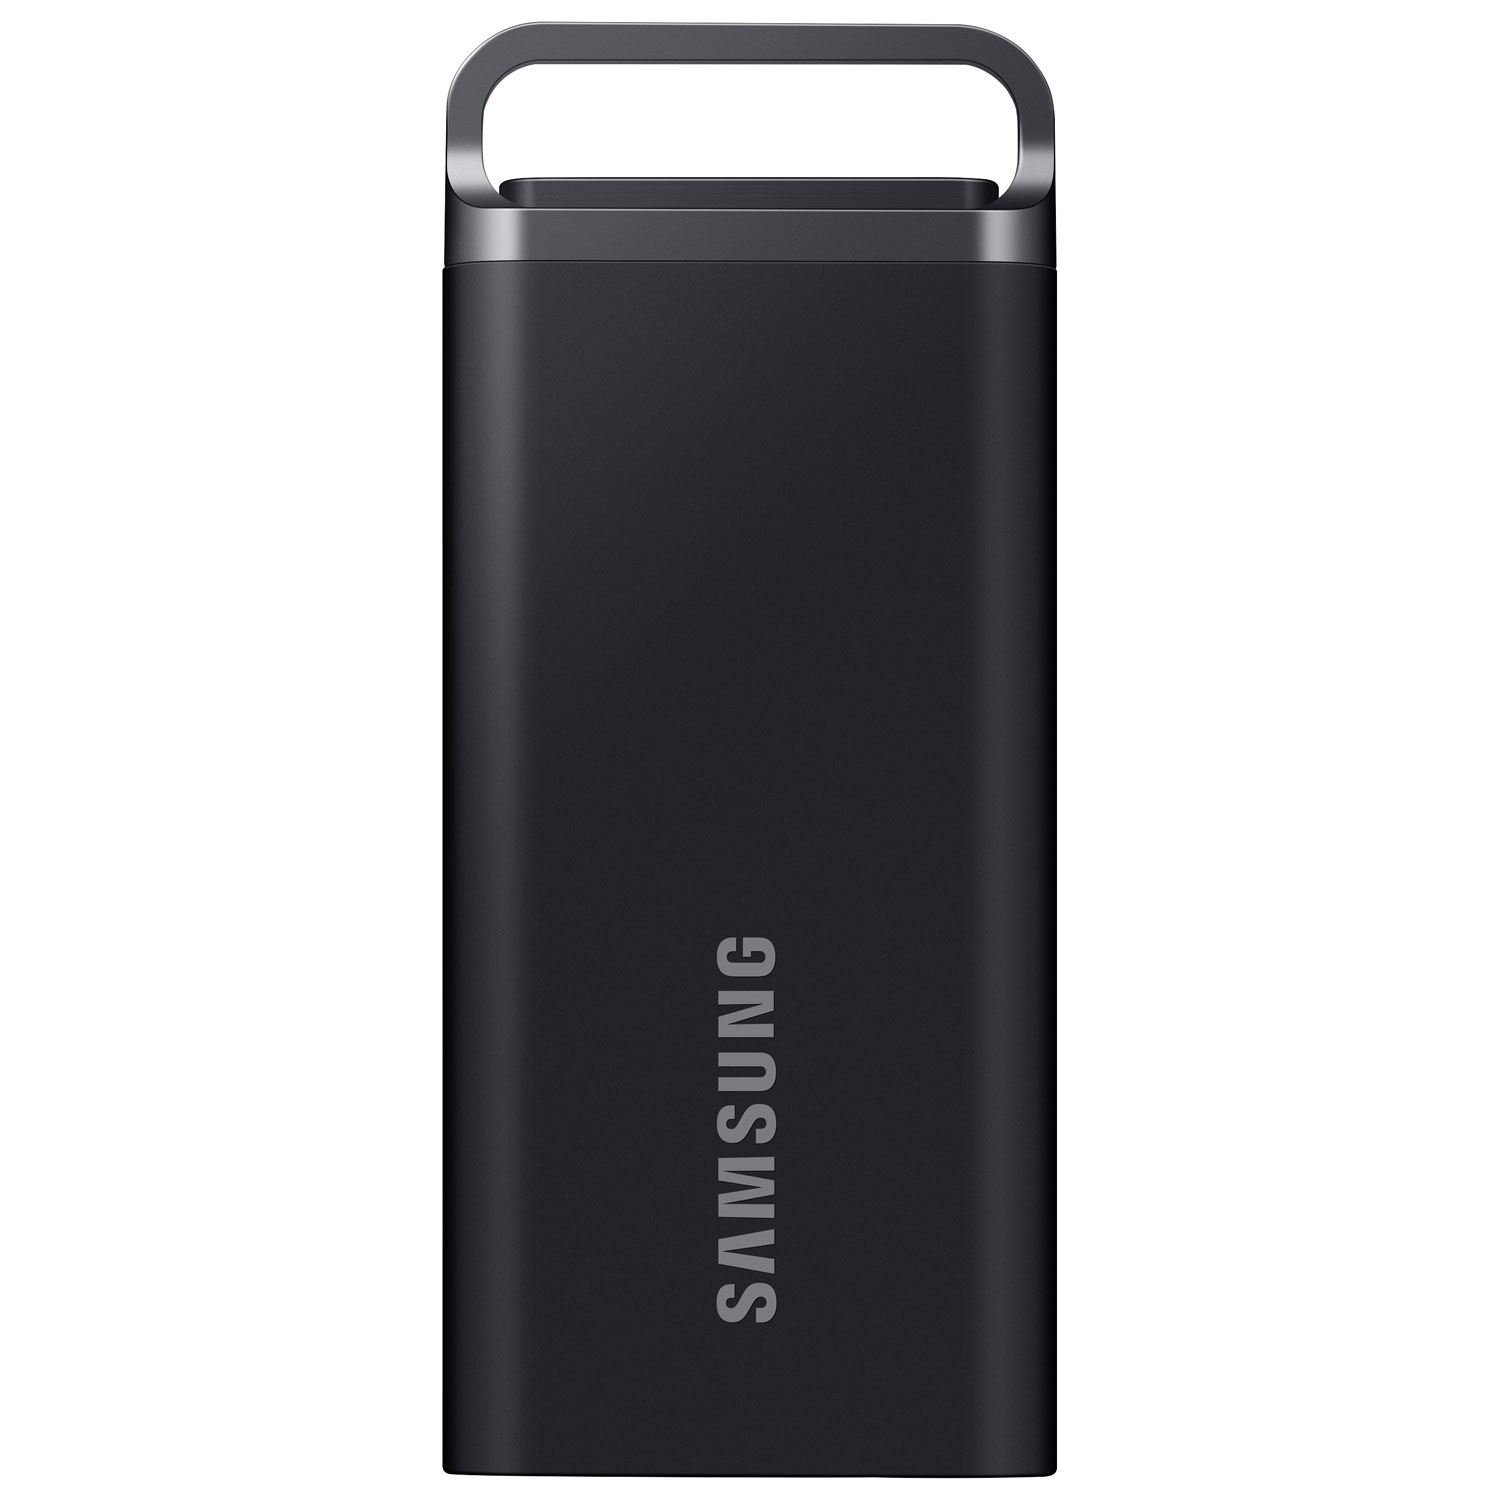 Samsung T5 EVO 4TB USB 3.2 External Solid State Drive (MU-PH4T0S/AM) - Black - English